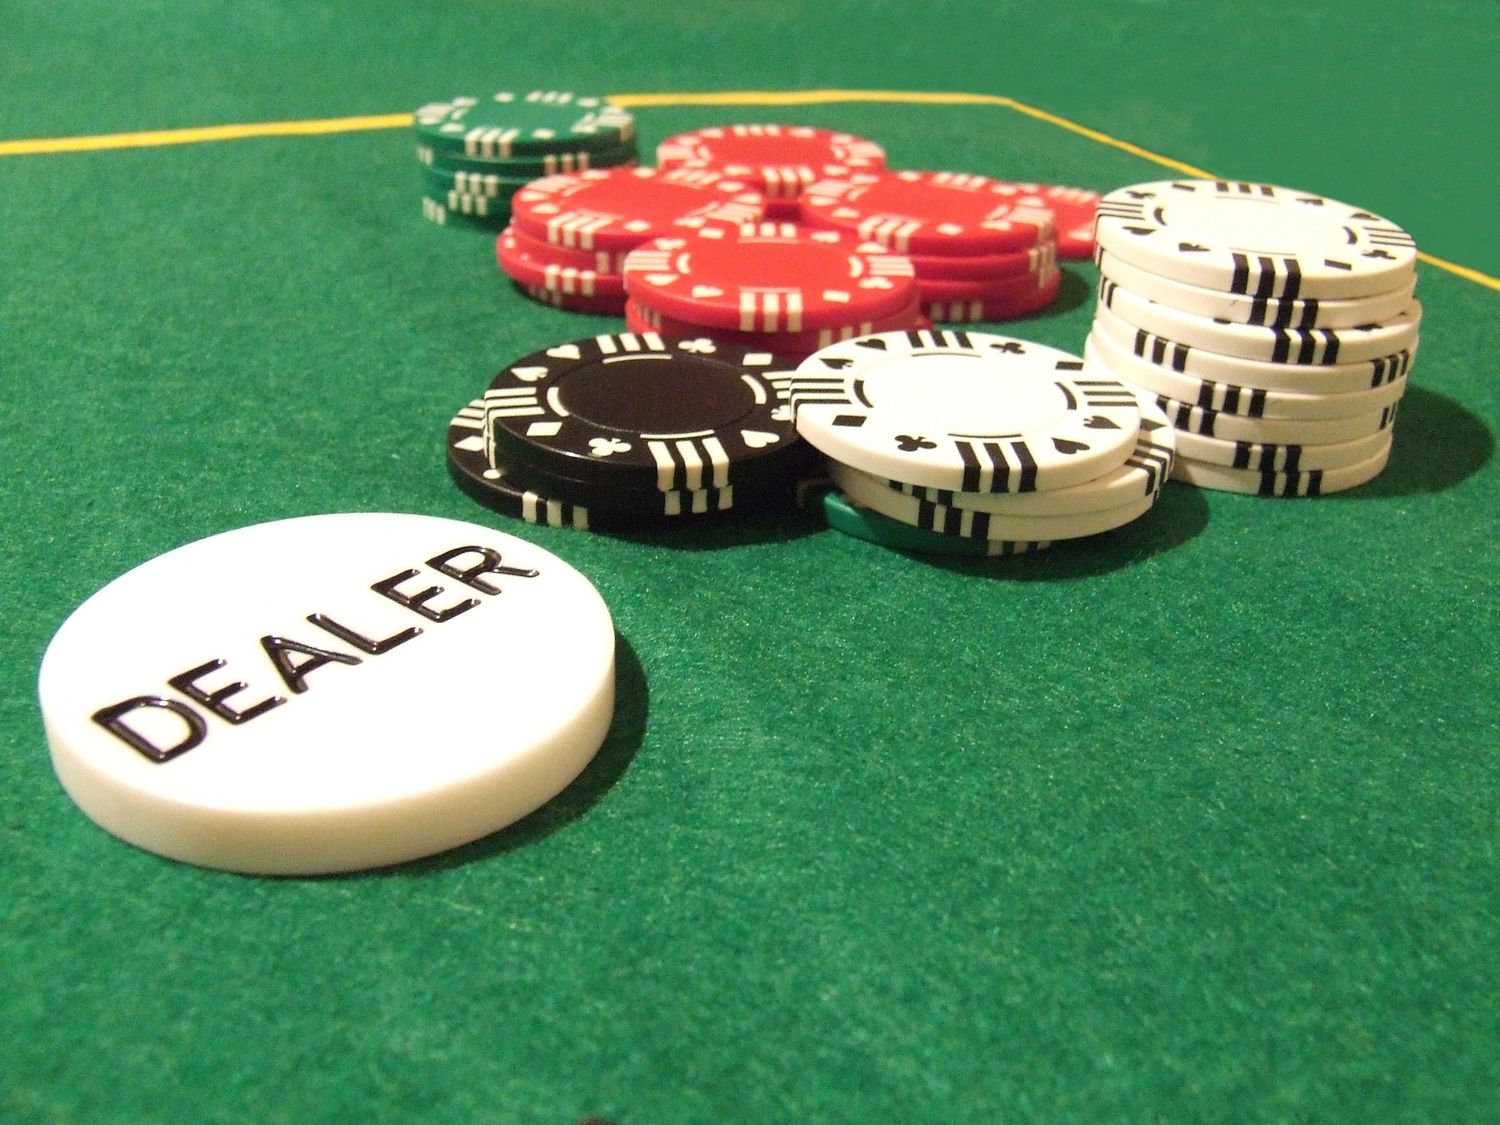 Bezdepozitni bonus poker keno